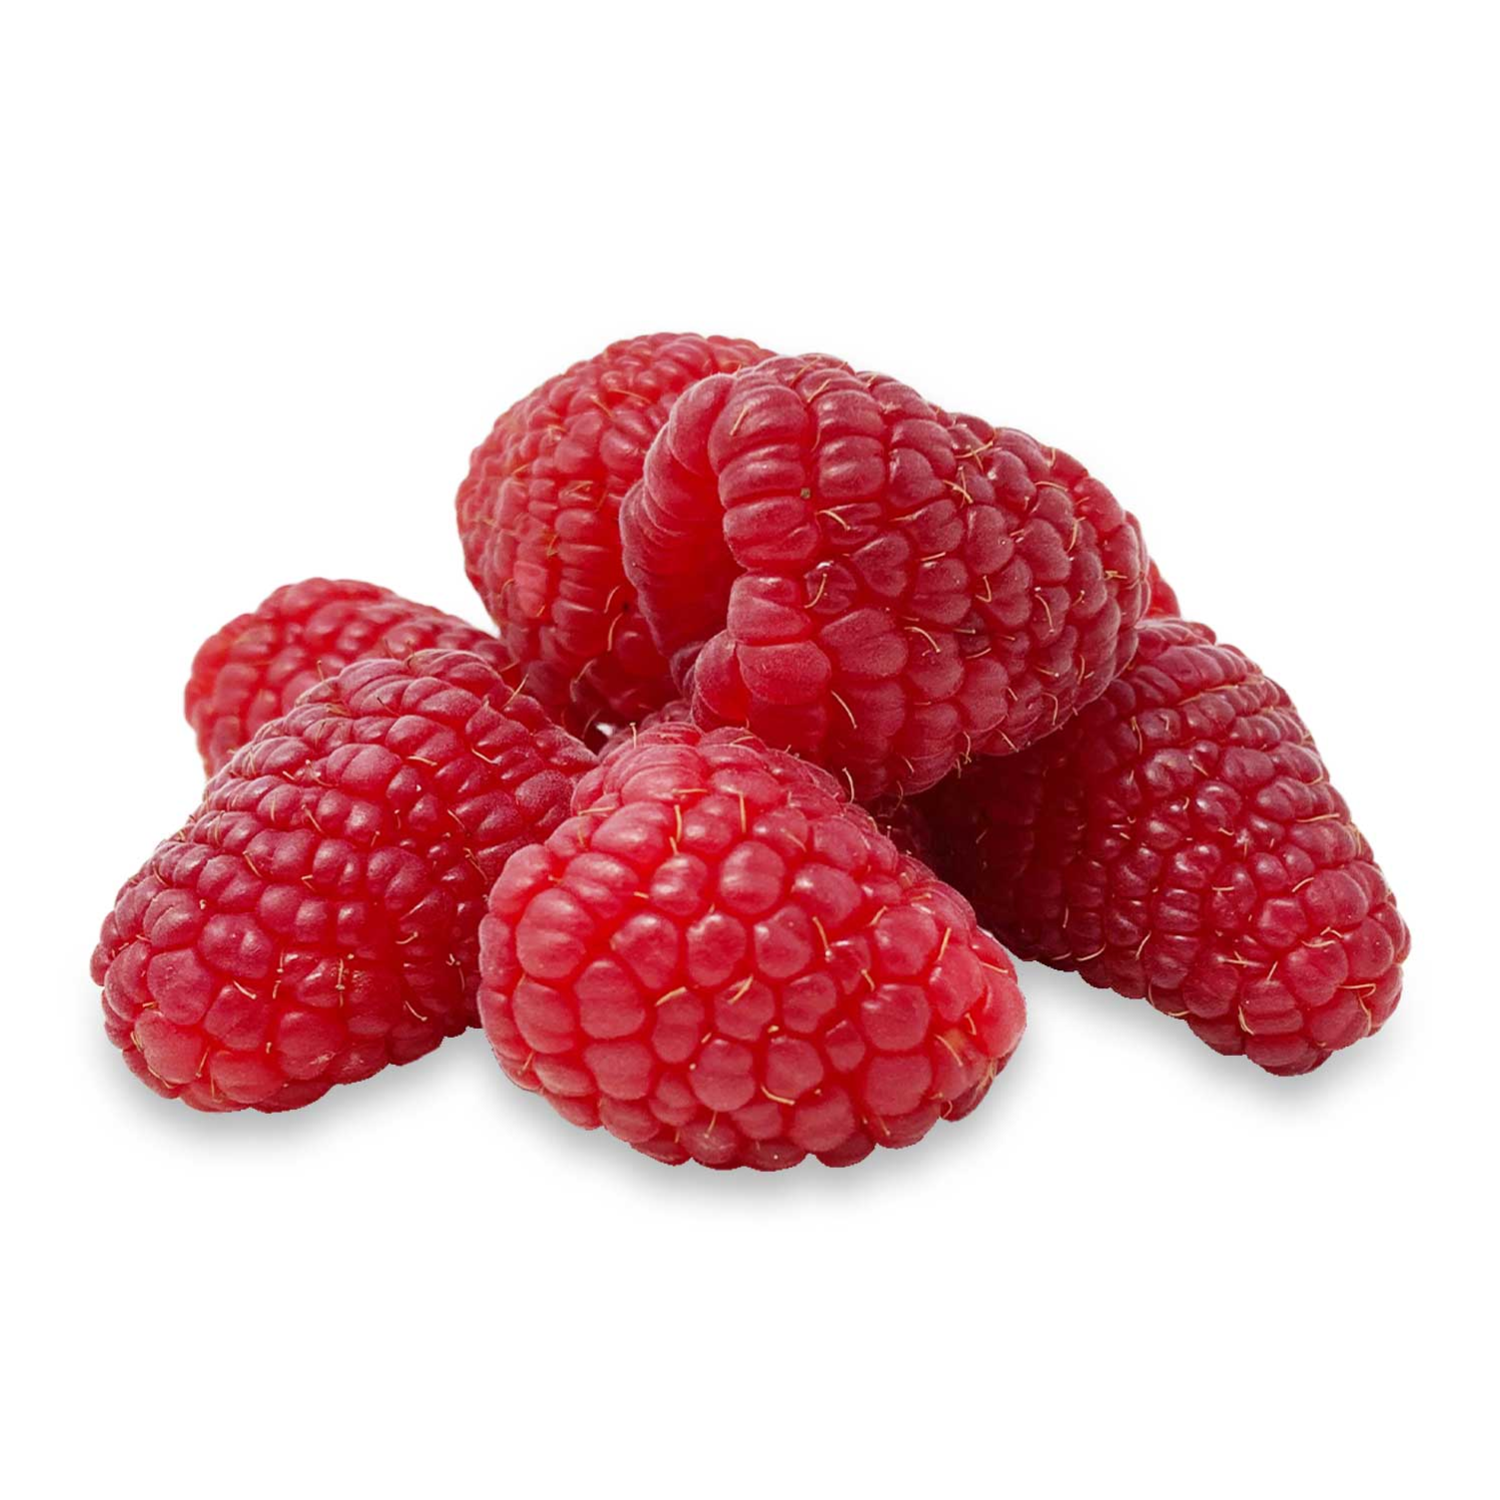 Everyday Essentials Raspberries 125g | ALDI